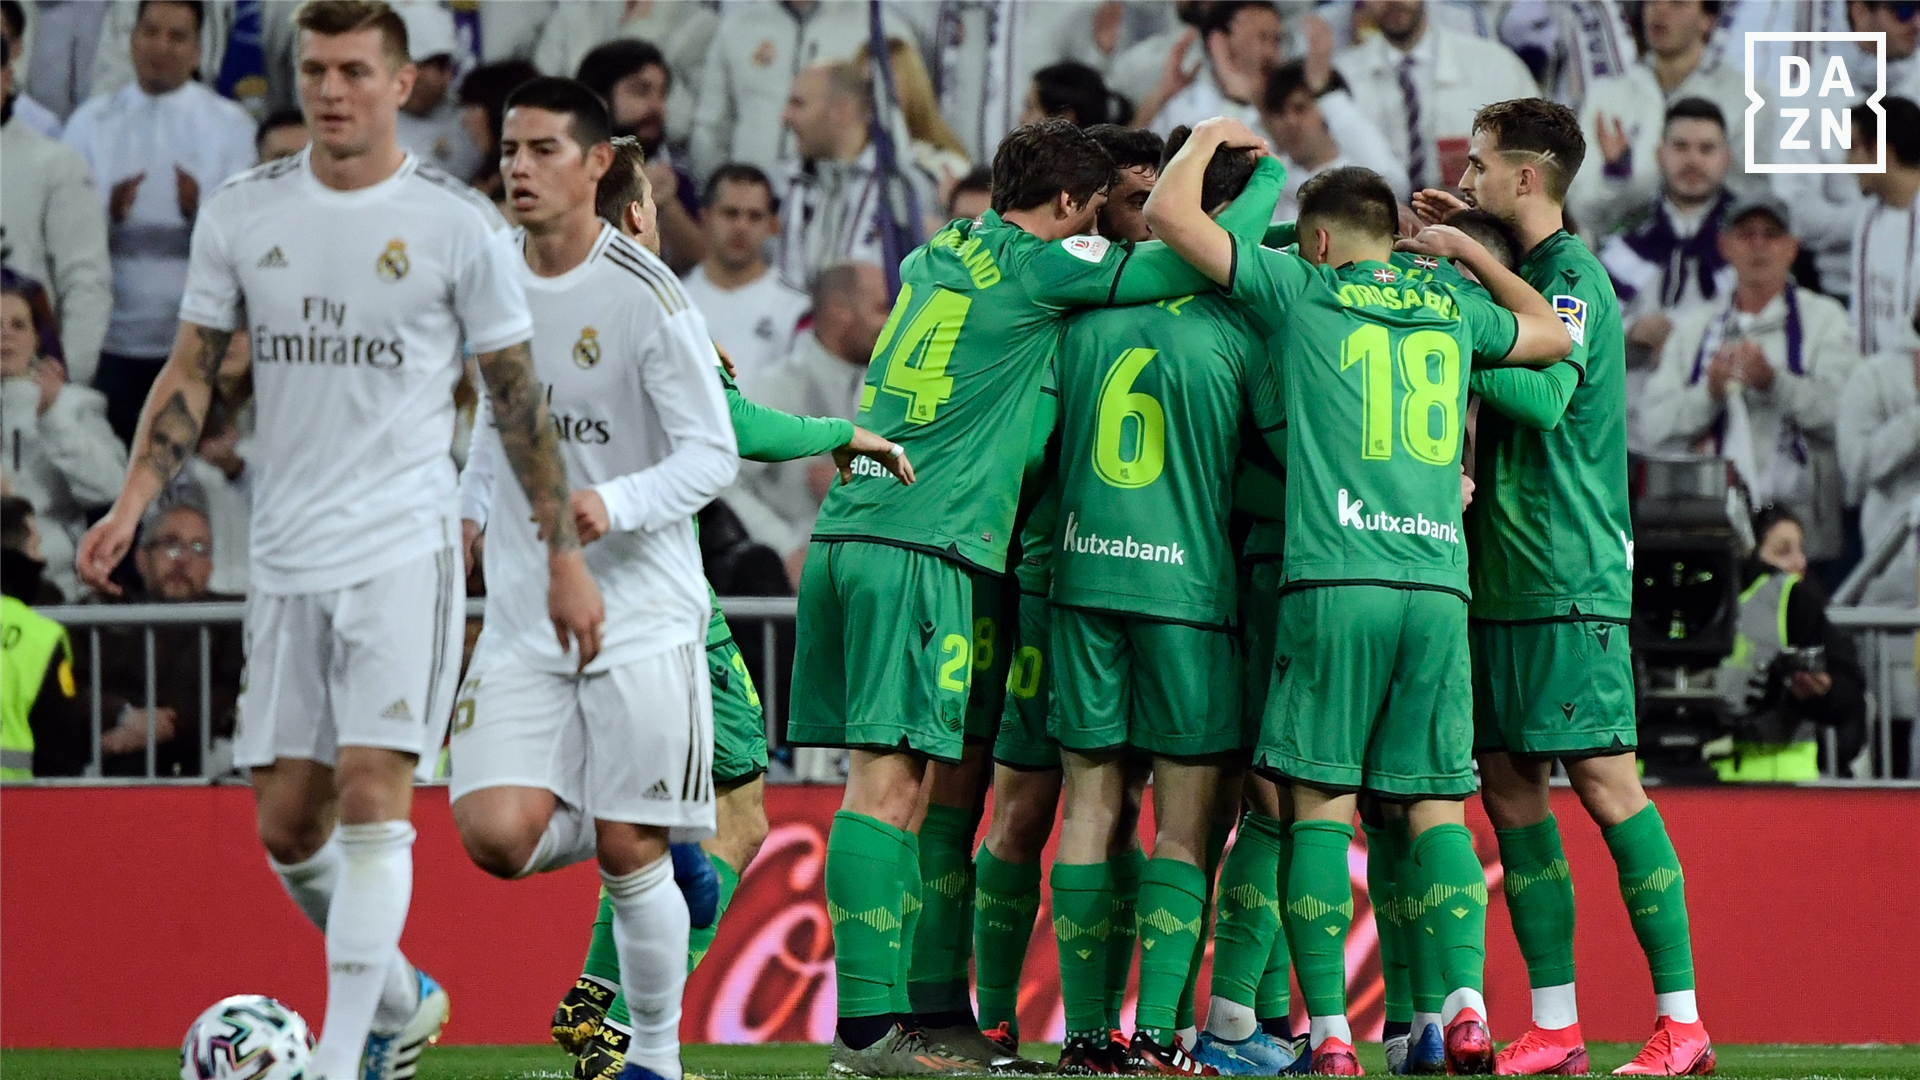 Real Madrid - Real Sociedad (3-4), Odegaard et Isak éliminent les merengue